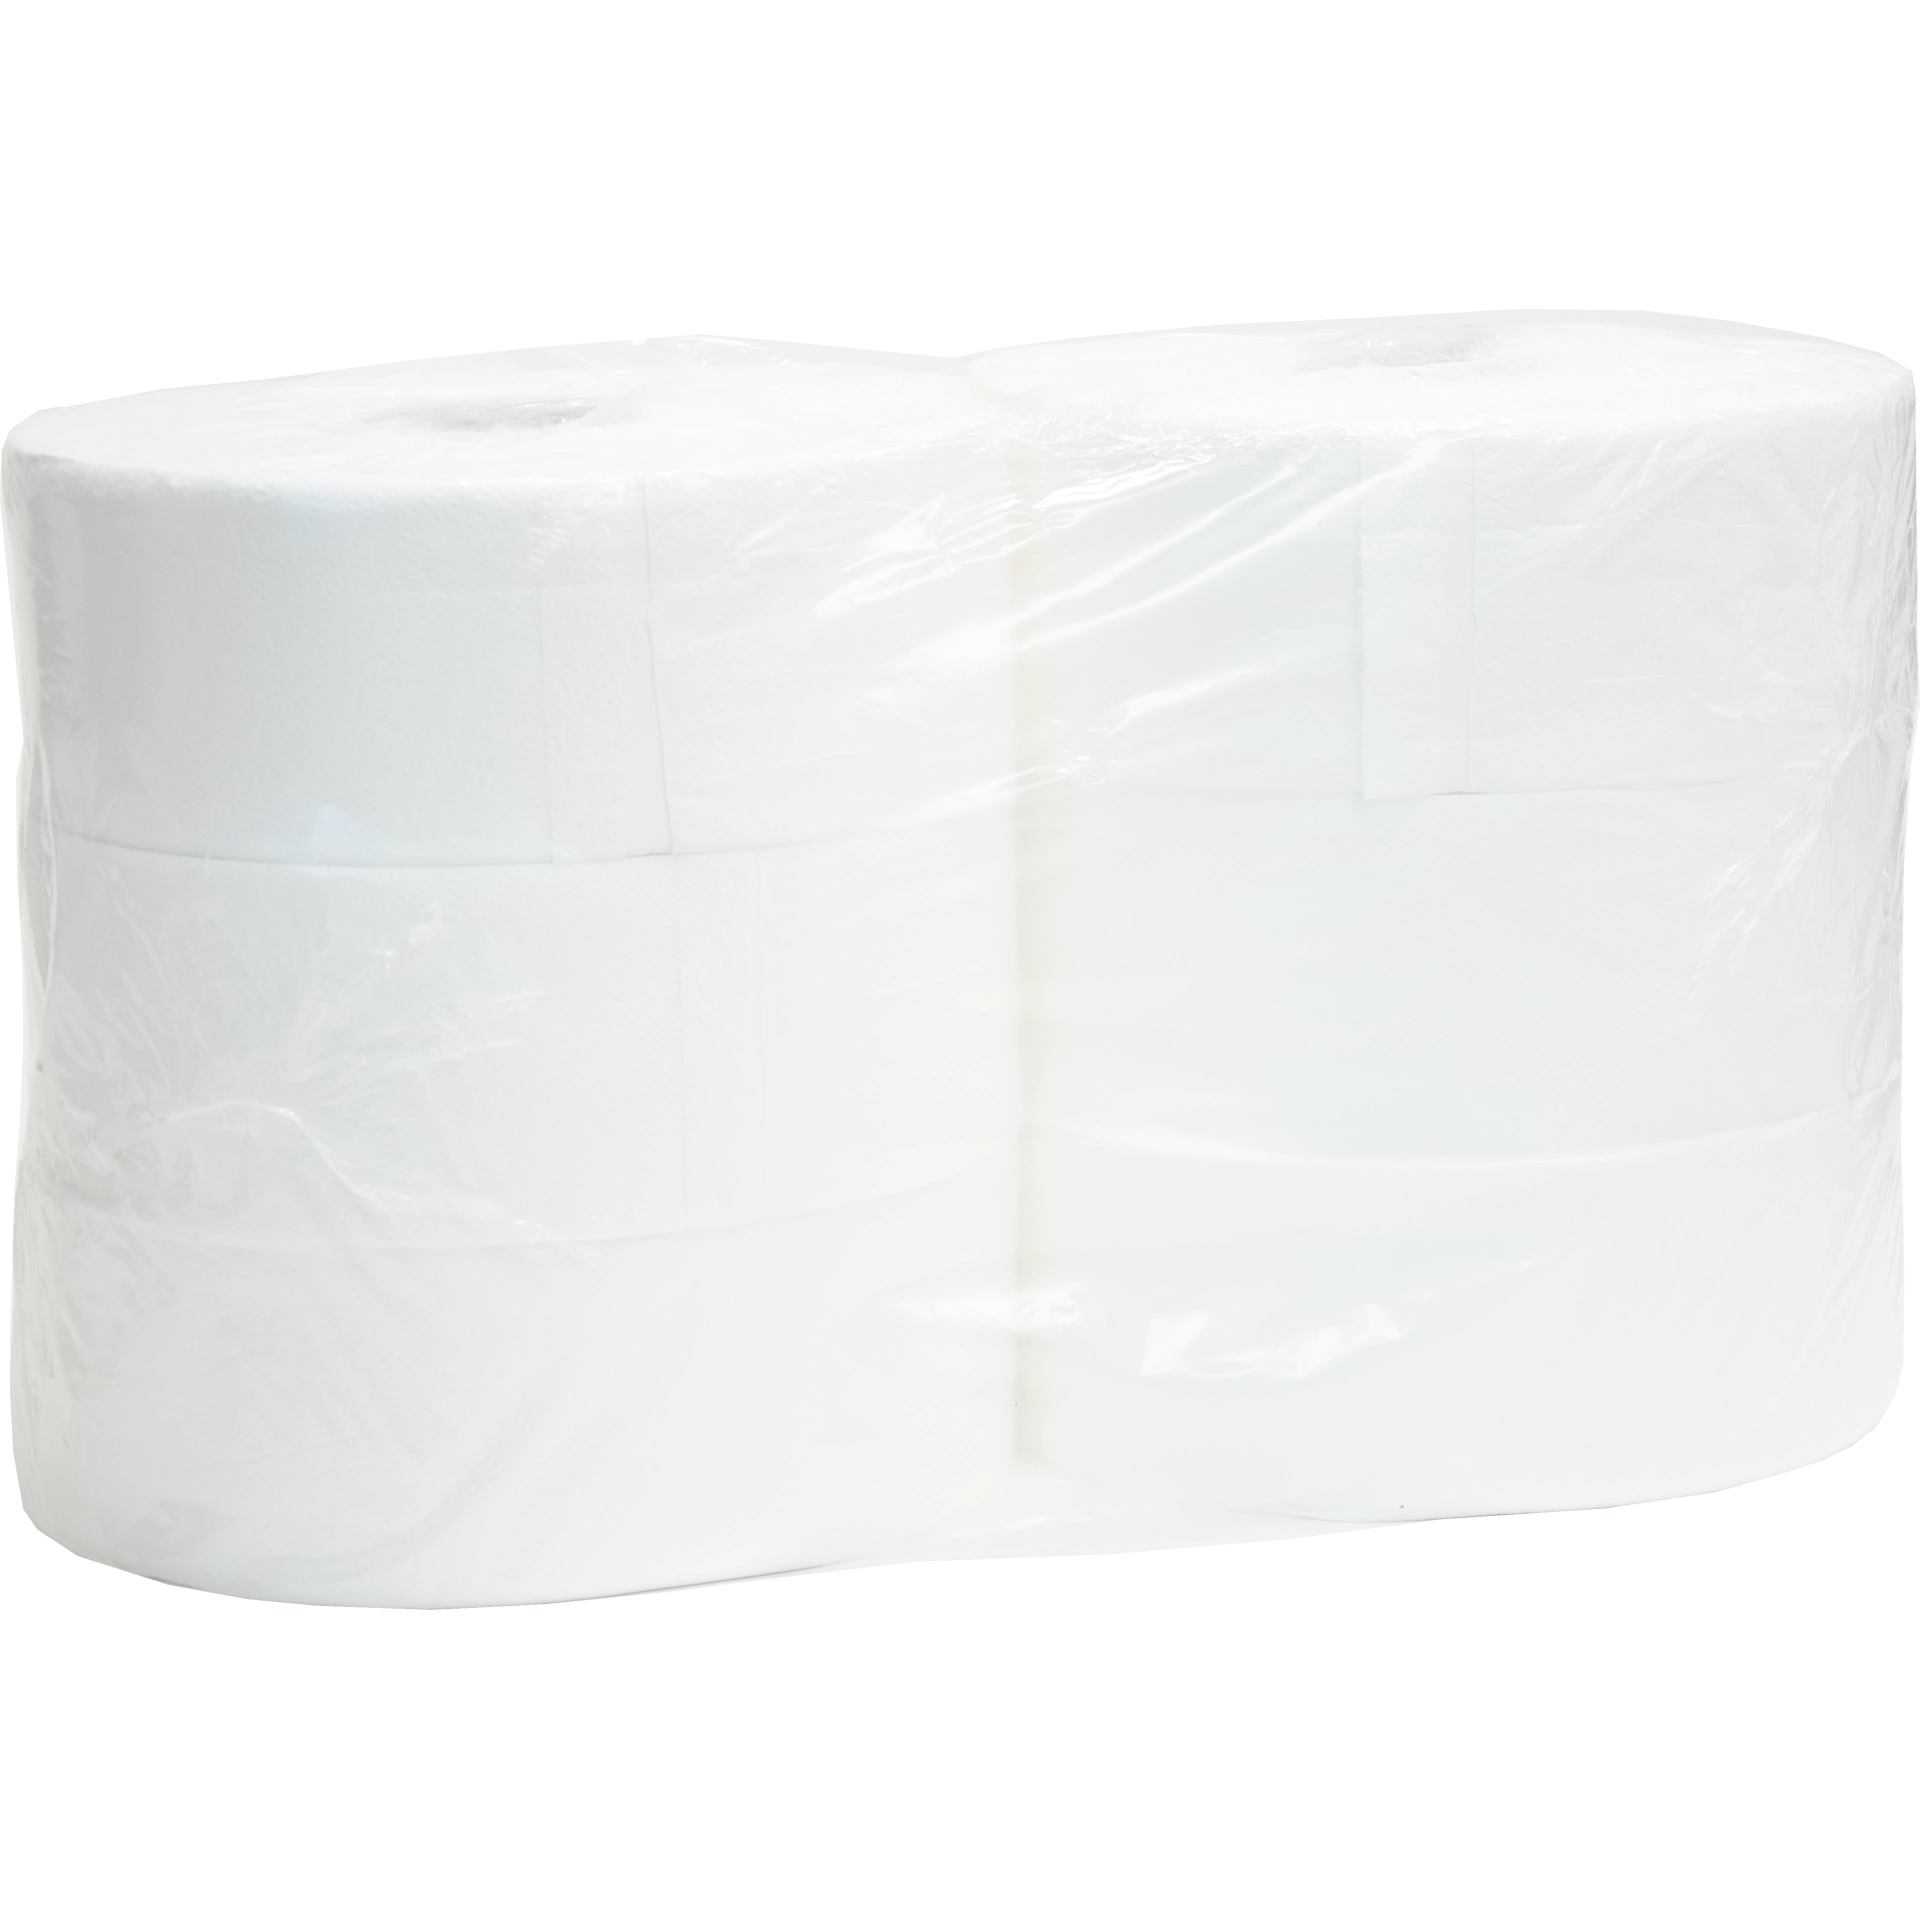 Toilettenpapier | Jumbo weiß 2lg. 1.360 Abrisse/25 cm